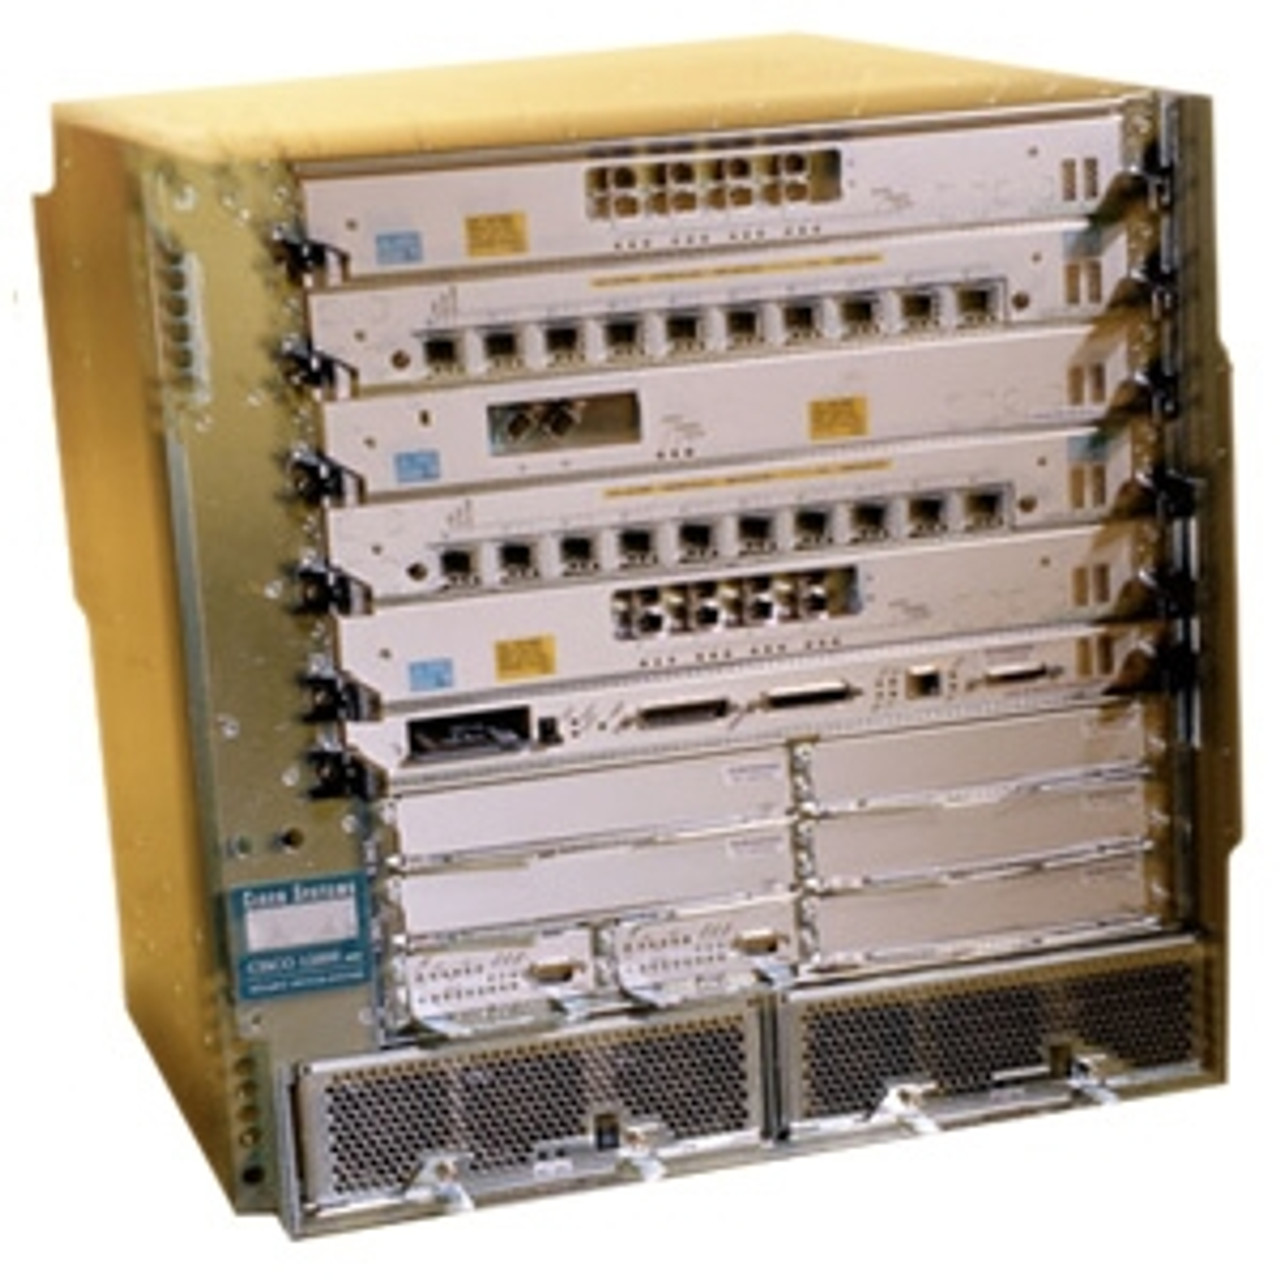 GSR6120DC Cisco 12406 Intelligent Router Chassis (Refurbished)